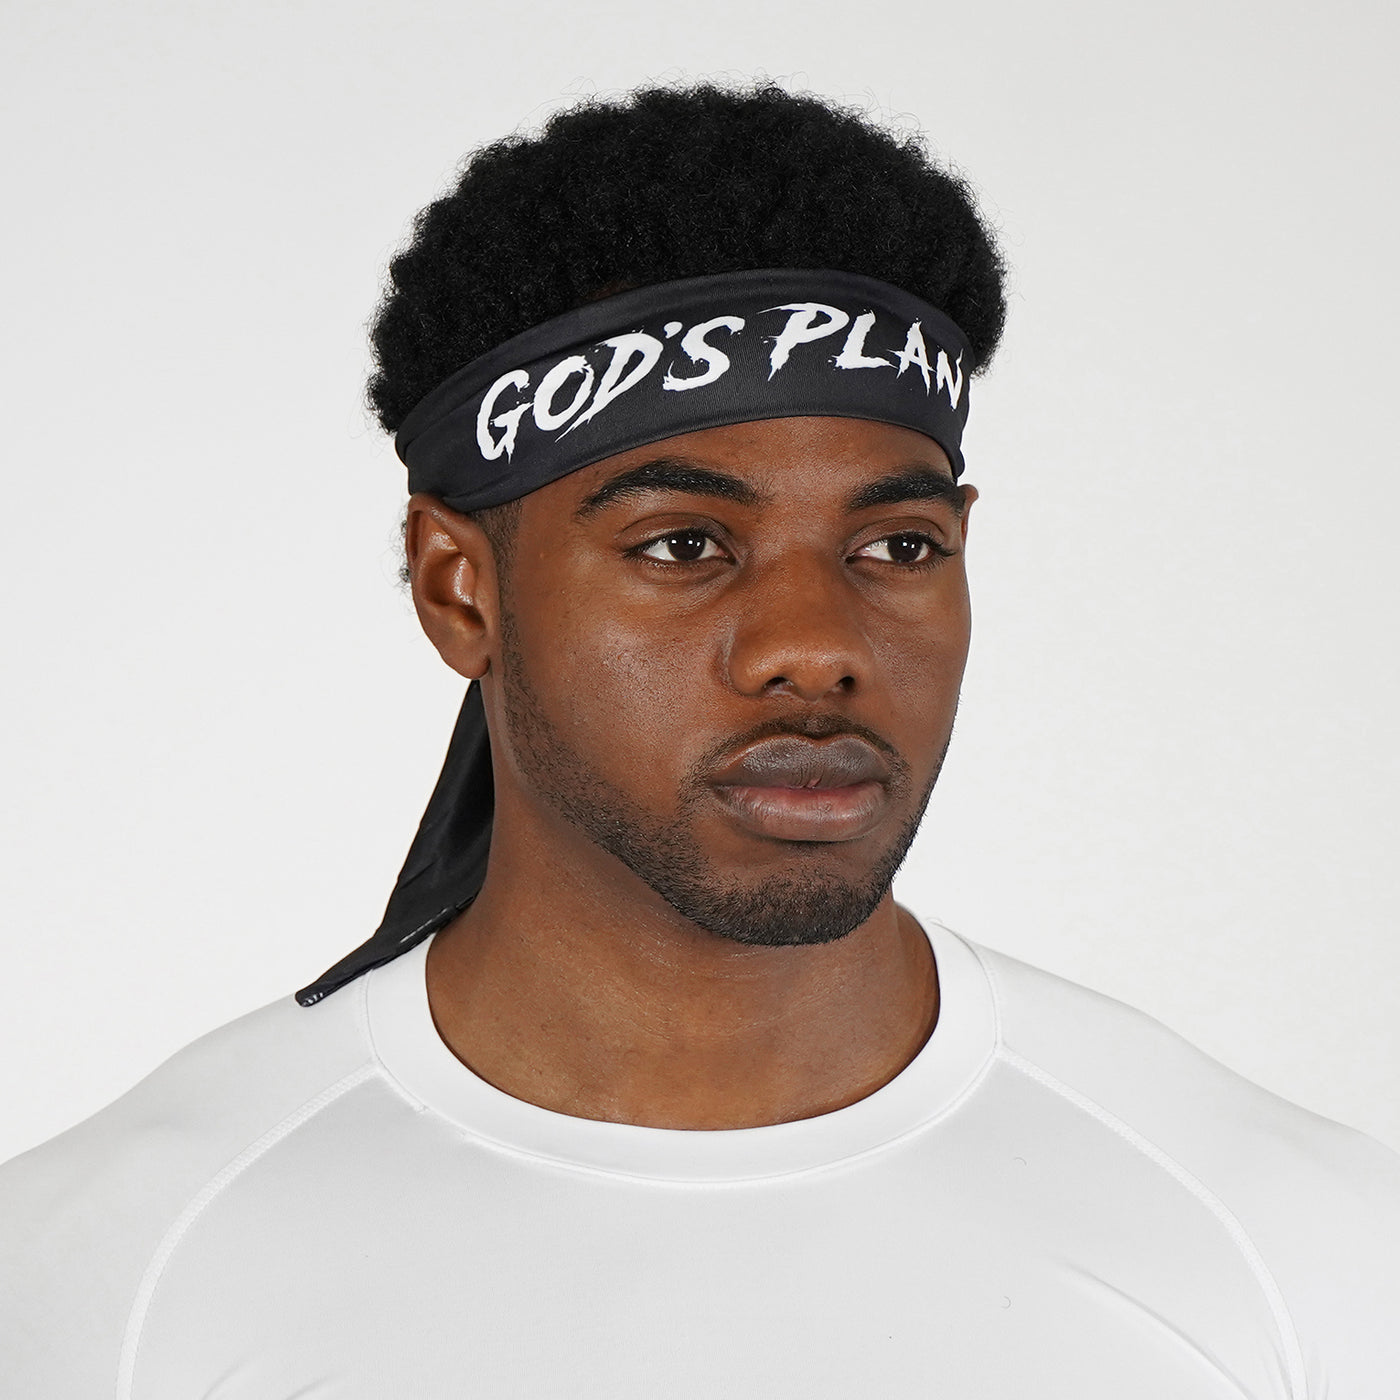 God's Plan Black Ninja Headband